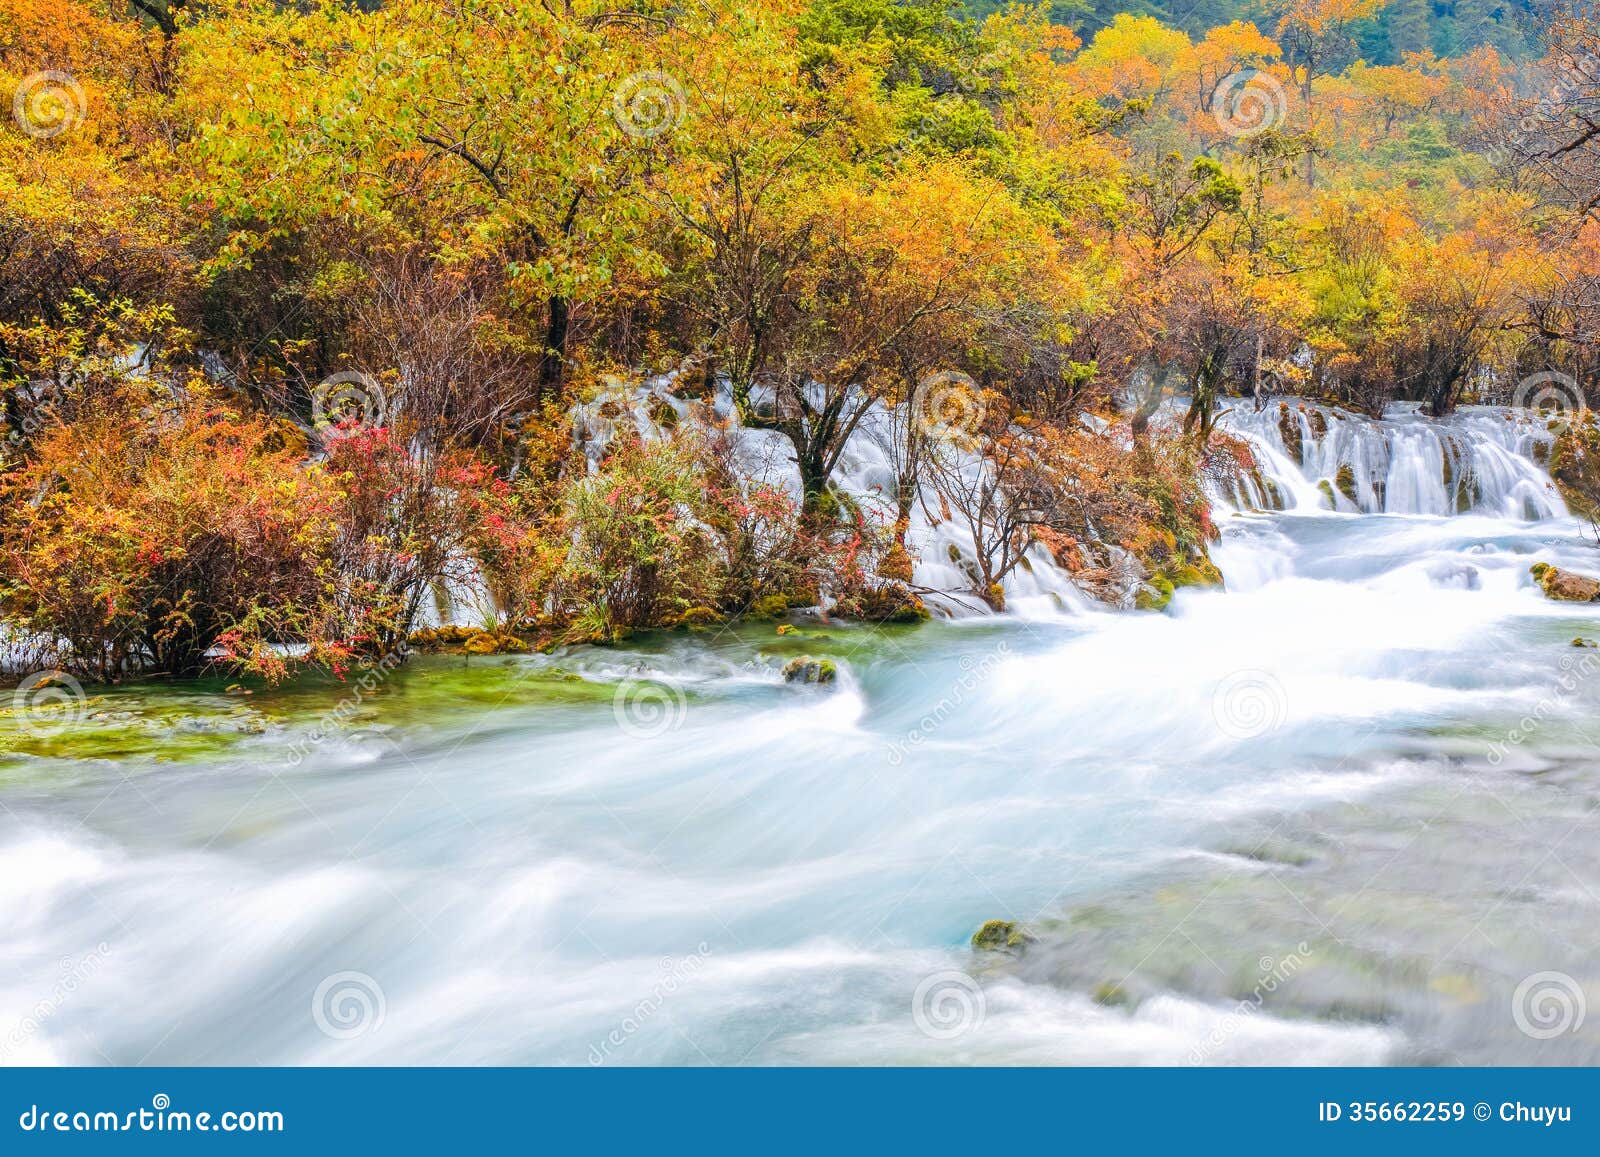 Beautiful Jiuzhaigou In Autumn Stock Image Image Of Stream Beautiful